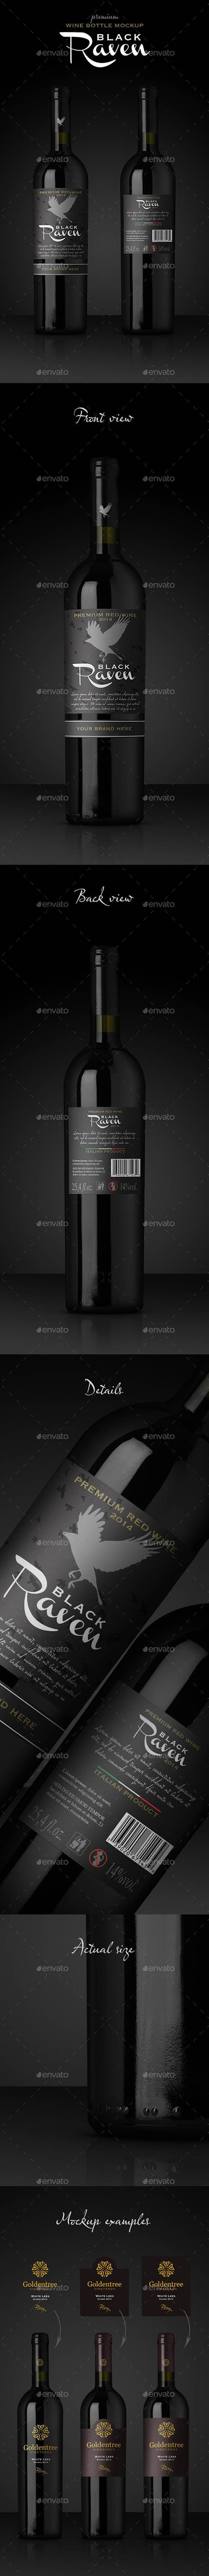 GraphicRiver - Premium Red Wine Mockup - 6711653